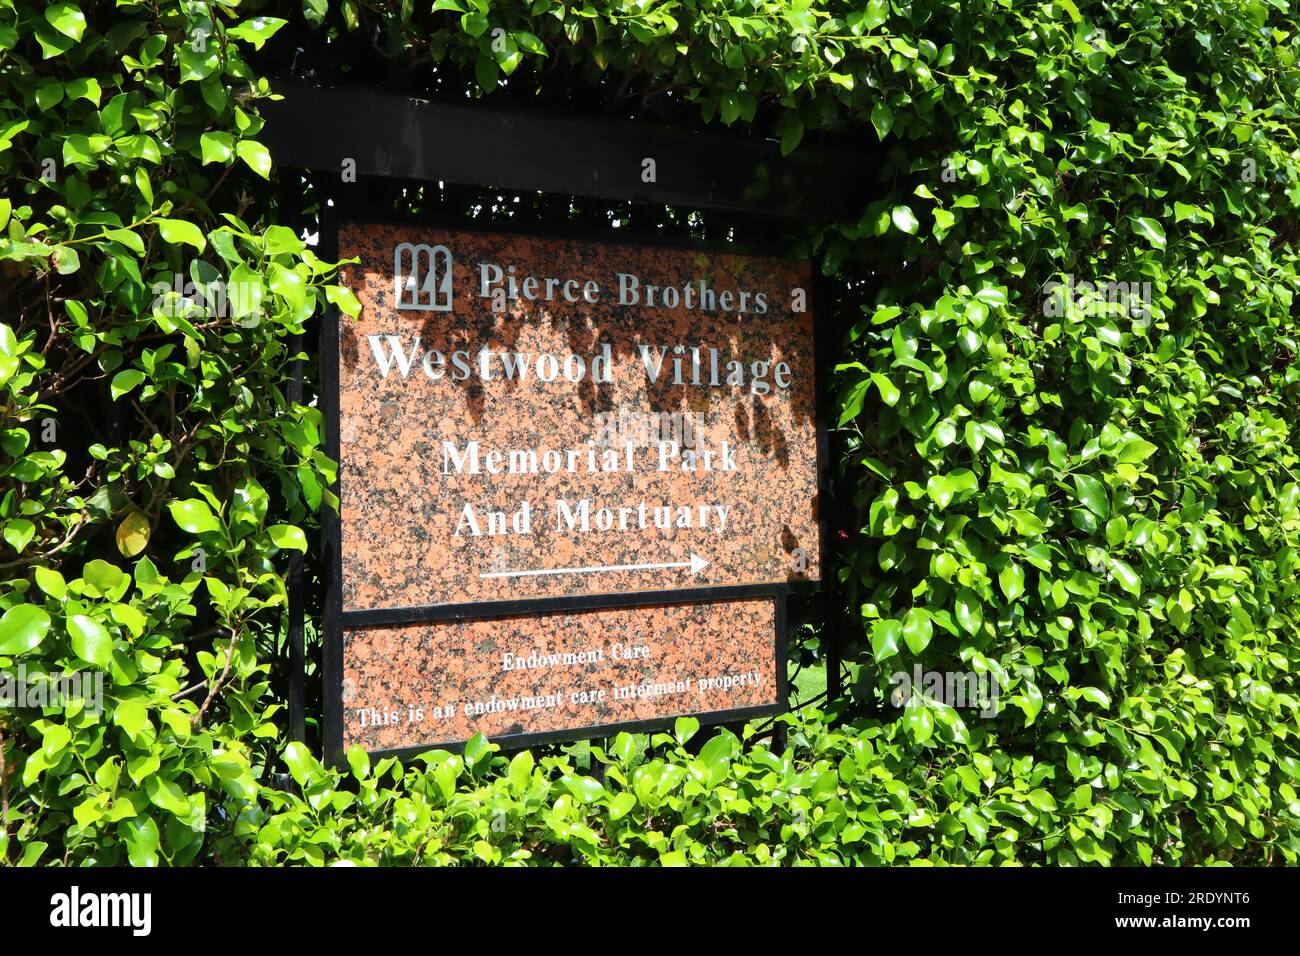 Los Angeles, Kalifornien: Pierce Brothers Westwood Village Memorial Park Cemetery and Mortuary Stockfoto